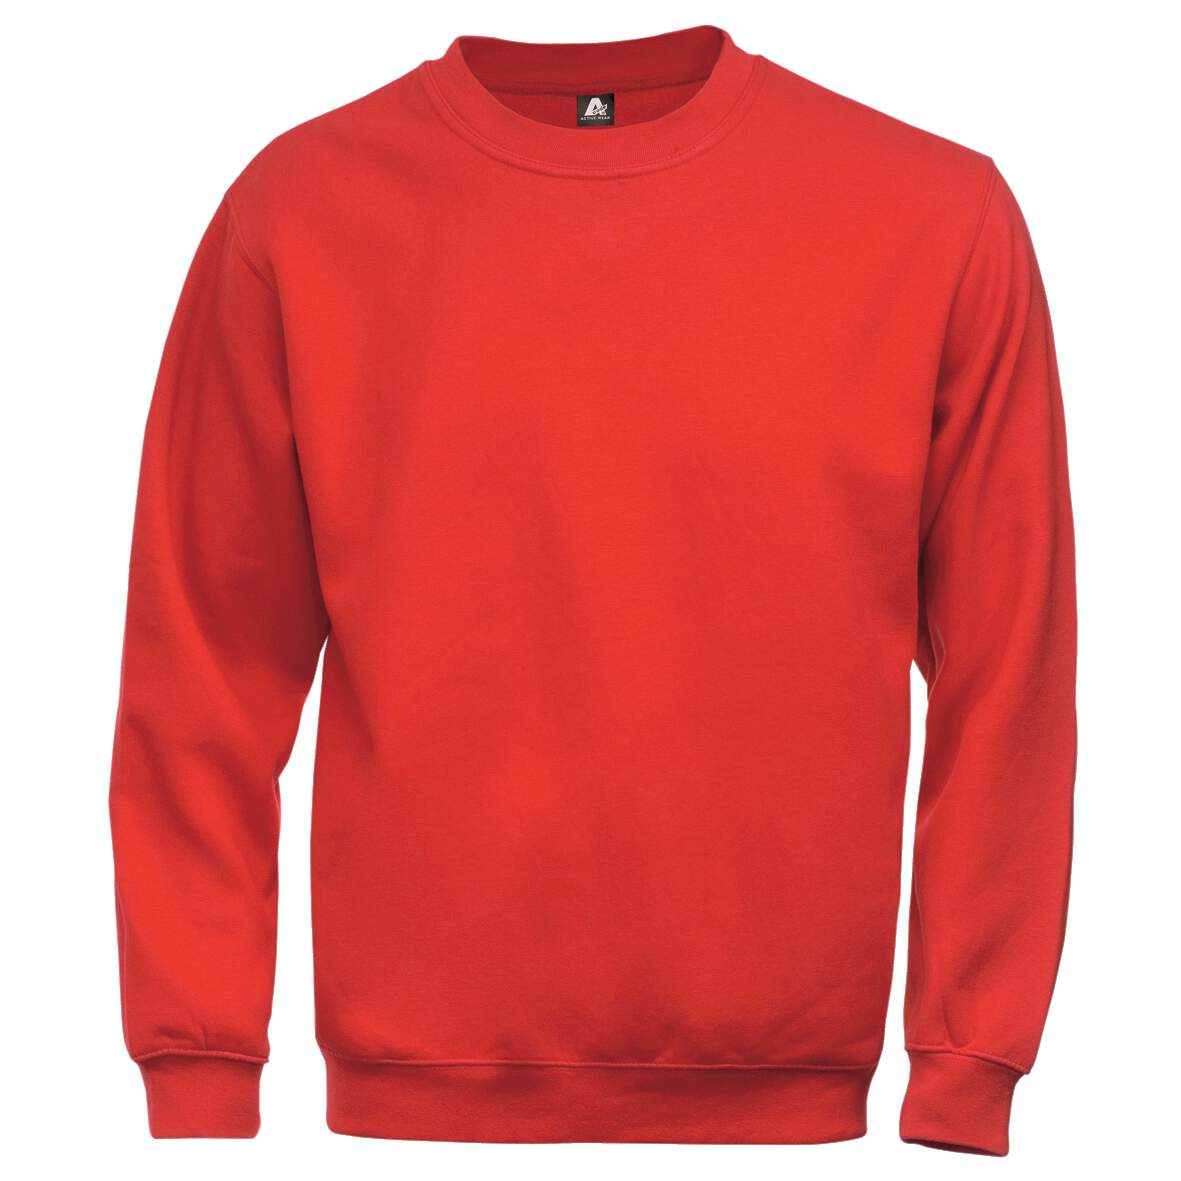 1181280 - Sweatshirt rot 100225